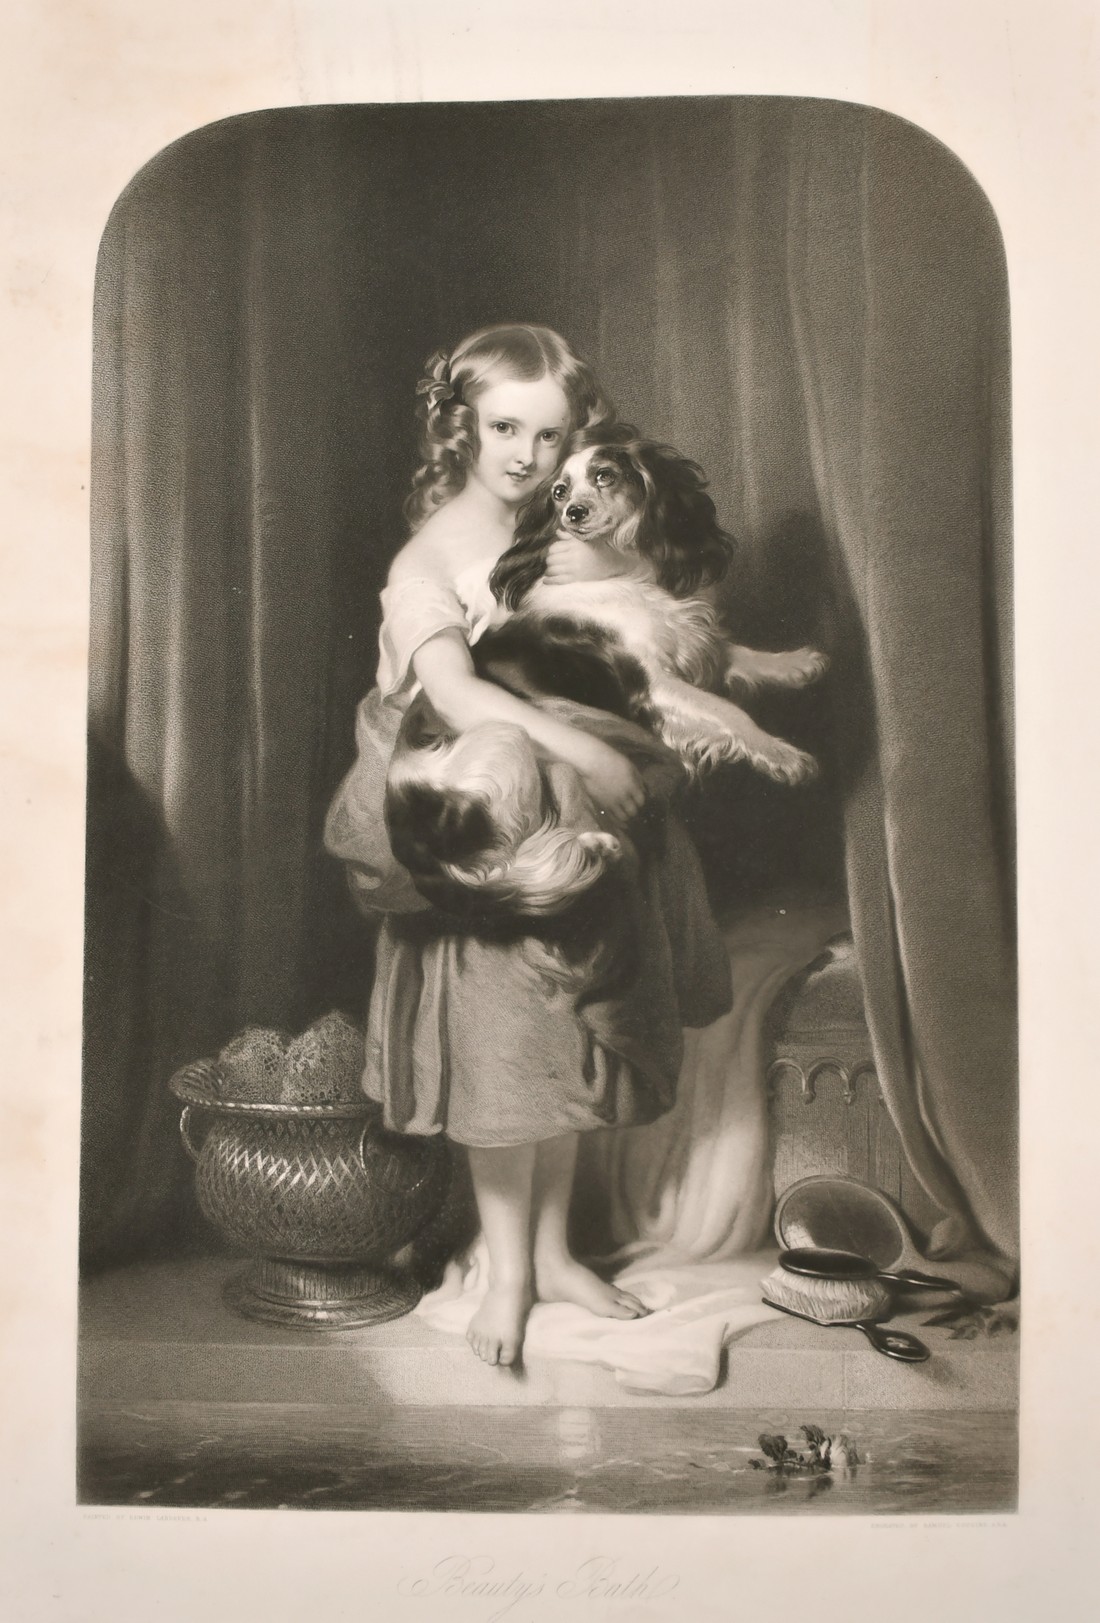 Samuel Cousins after Landseer, 'Beauty's Bath', a young girl holding a spaniel, mixed method